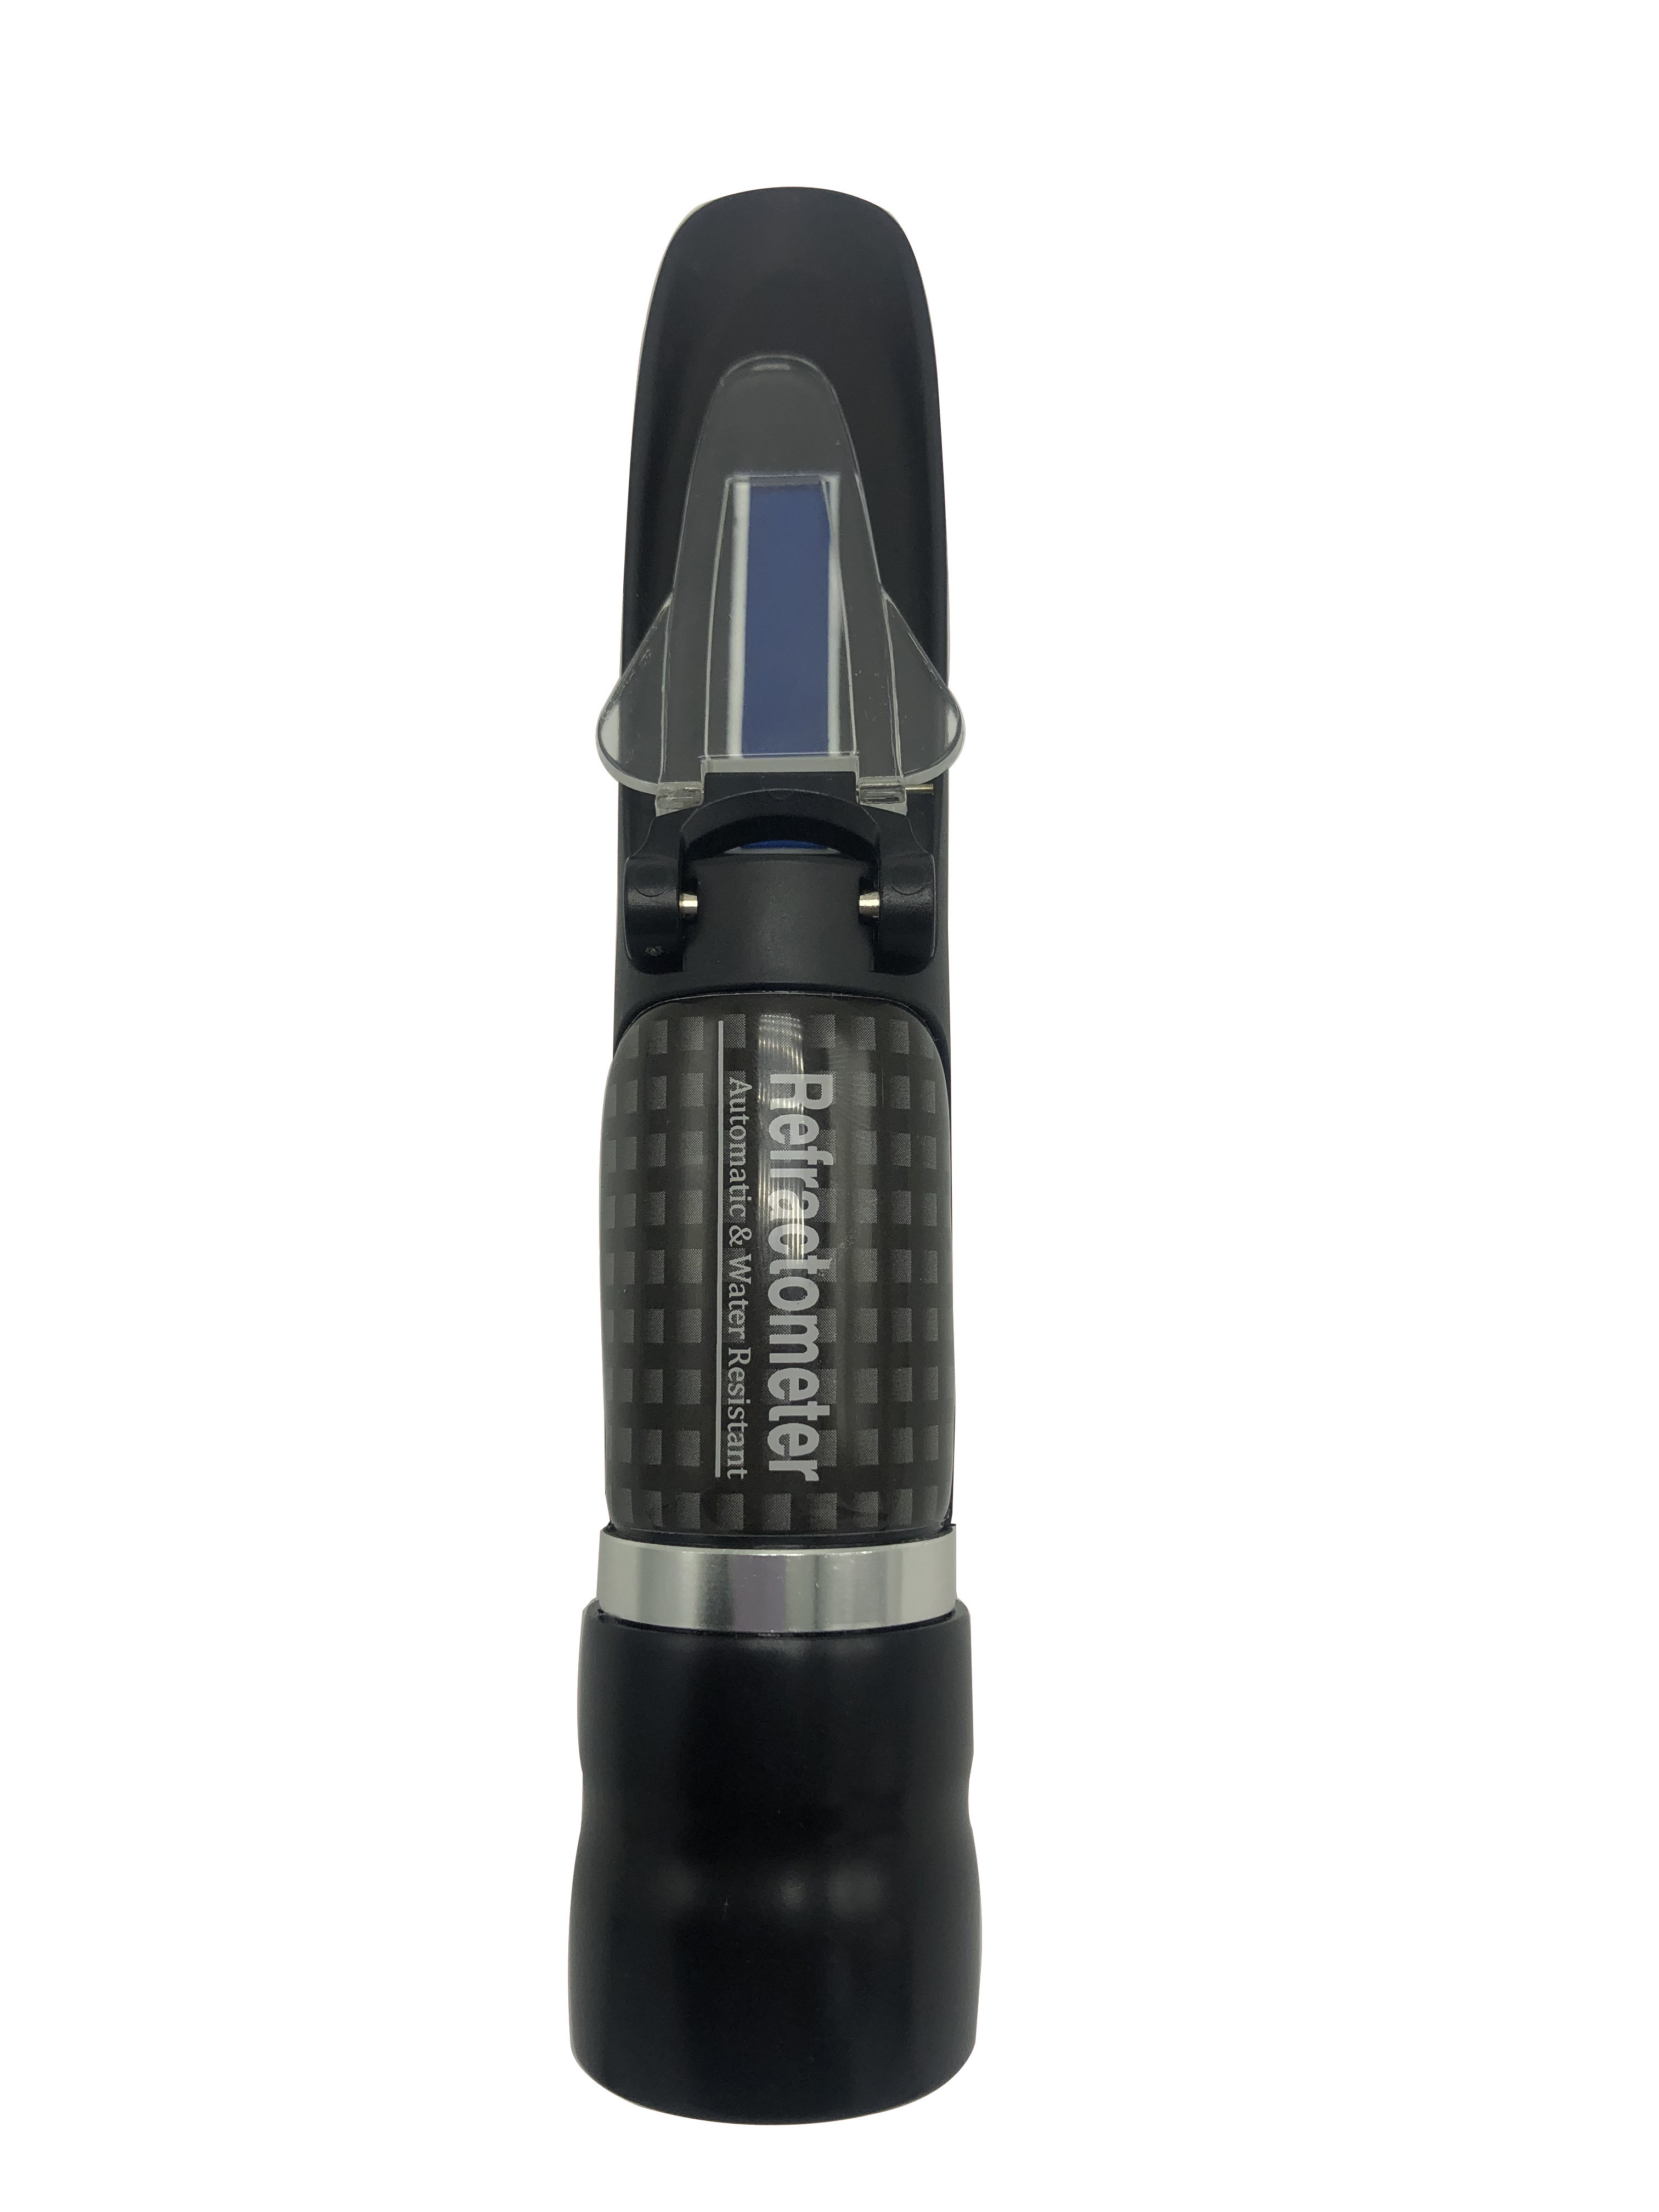 Beer Brix Refractometer Range 0-32%,Homebrew tester of Waterproof handheld refractometer